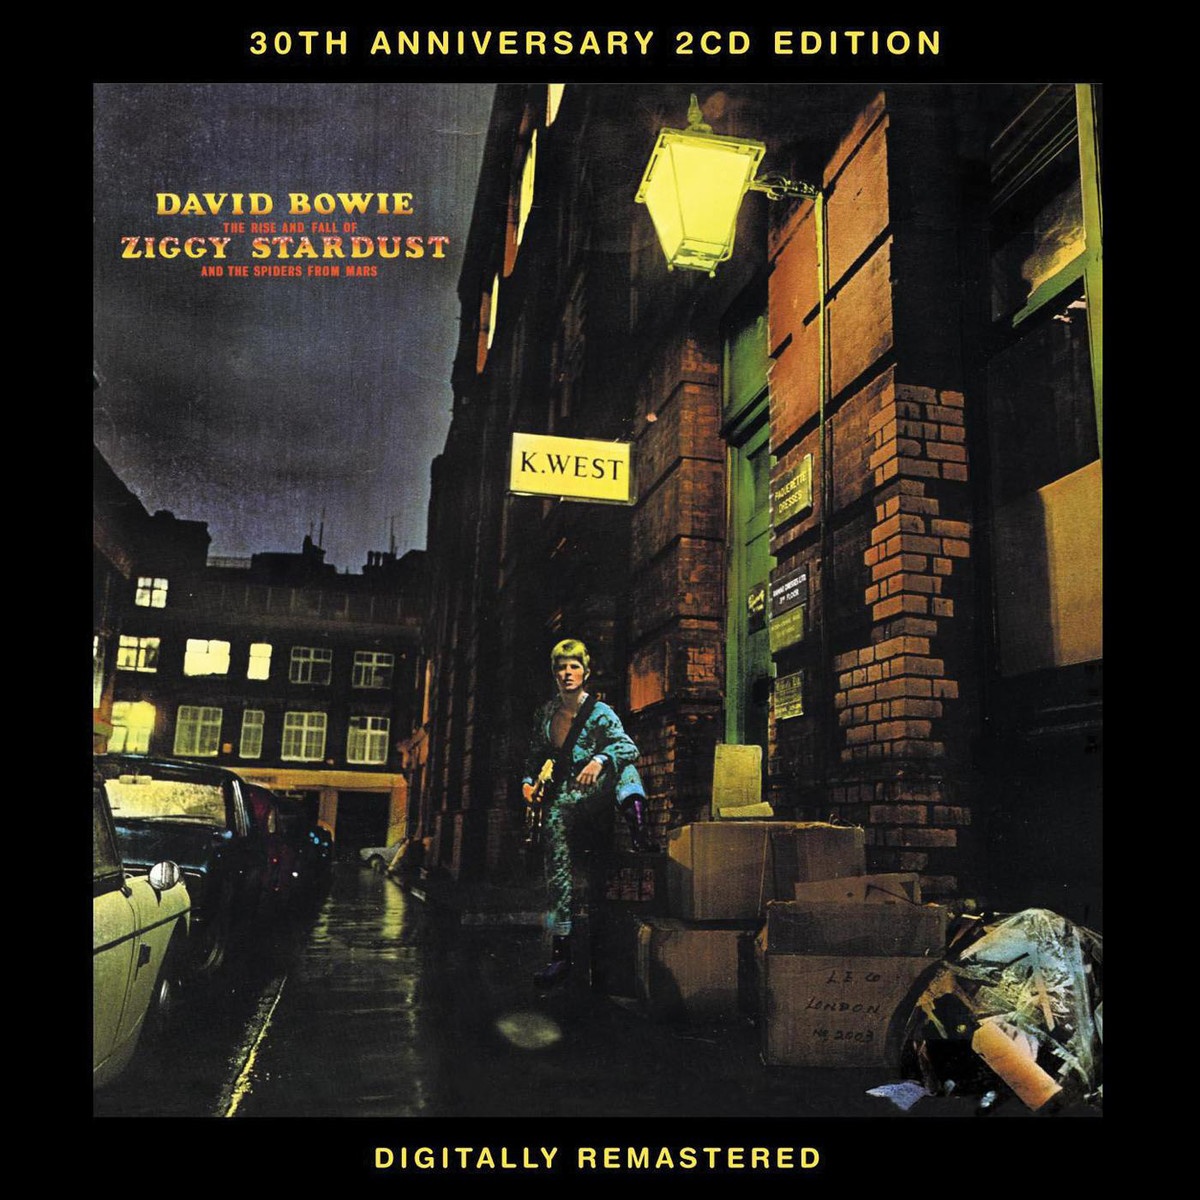 Lady Stardust (1999 Digital Remaster)